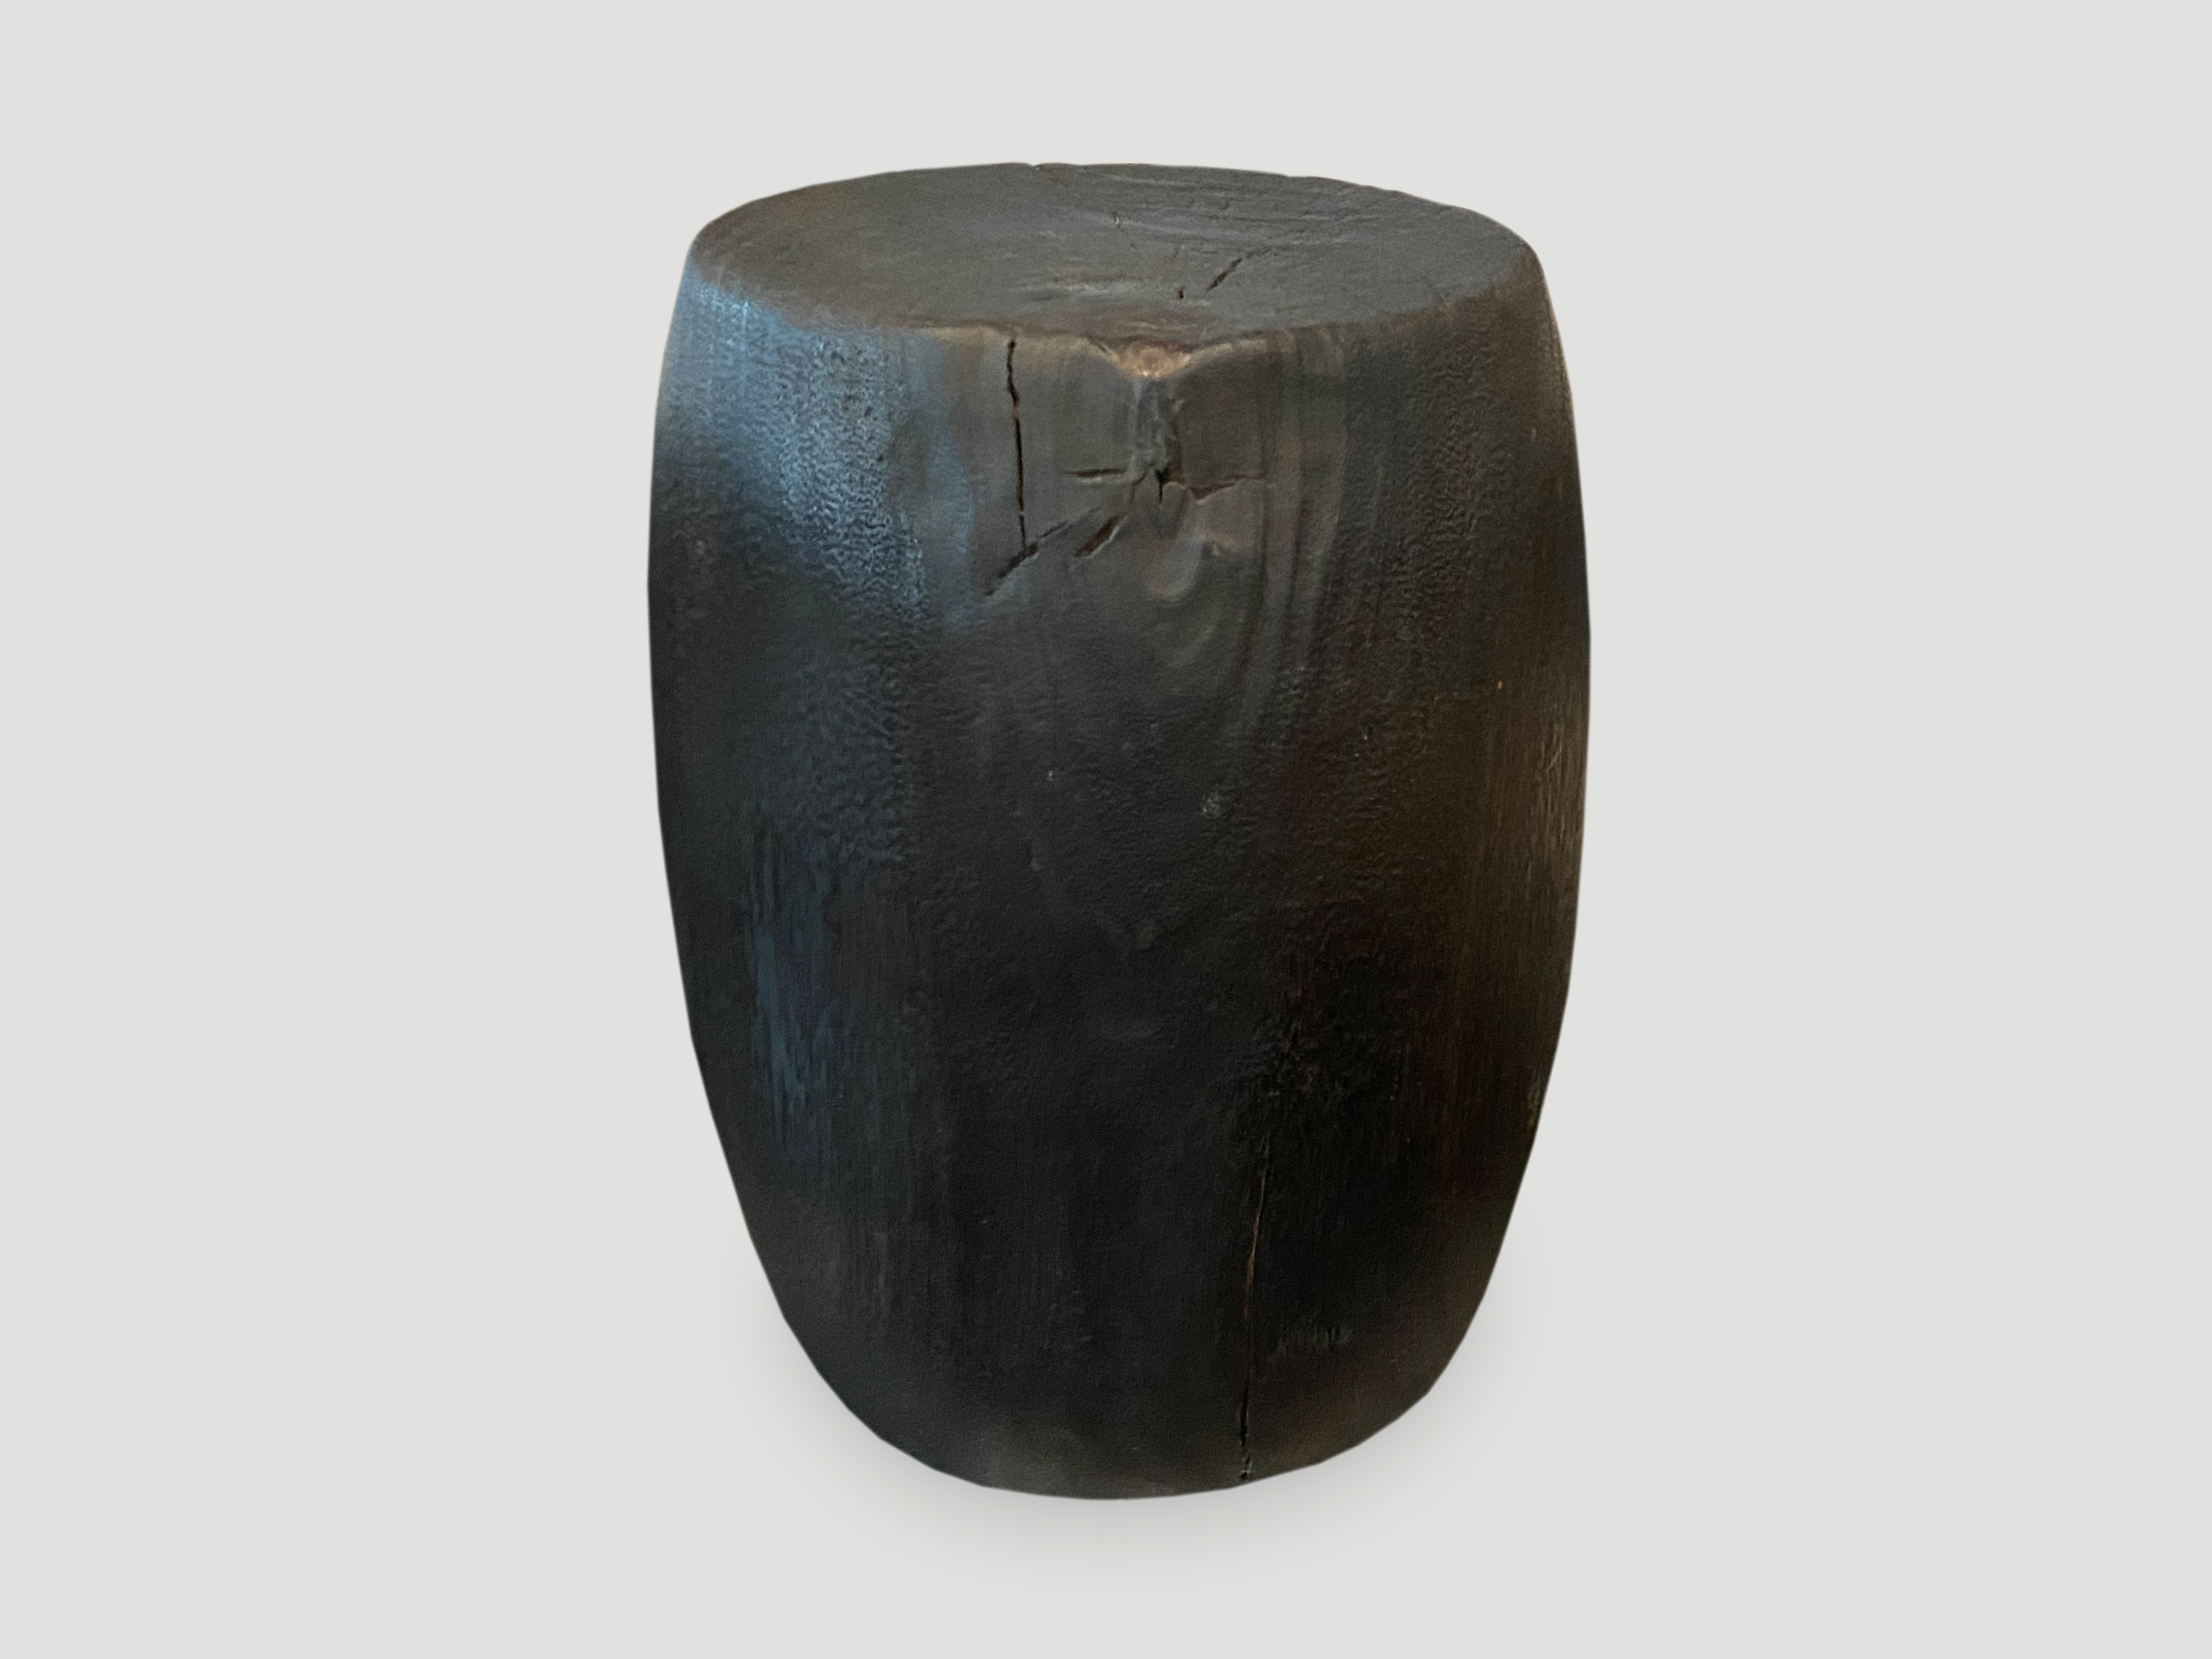 drum shape reclaimed teak wood side table or stool